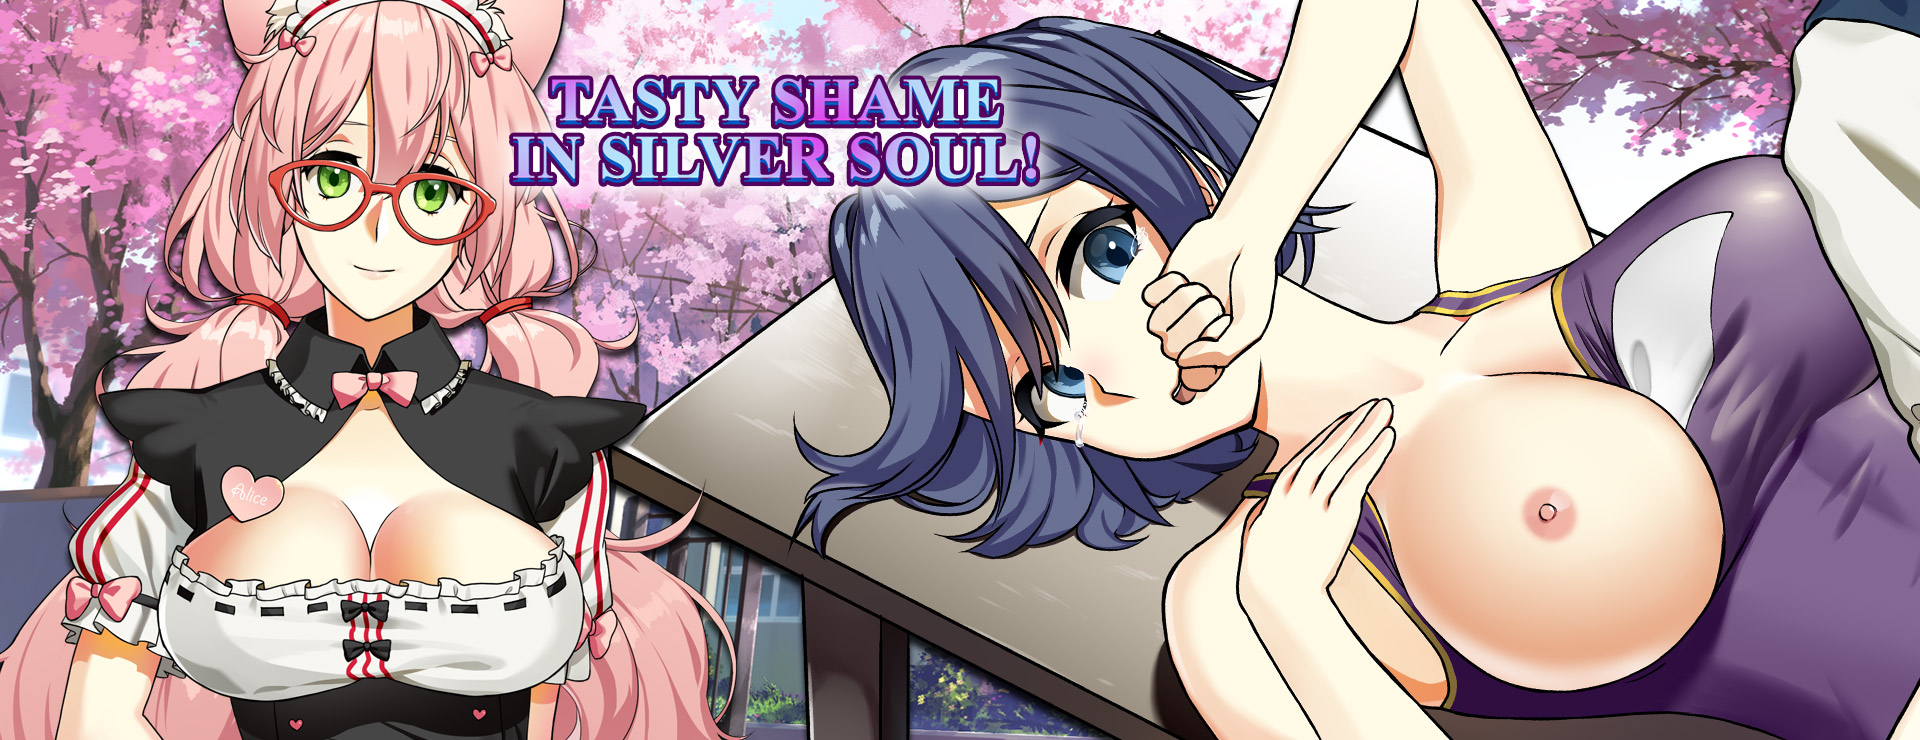 Tasty Shame in Silver Soul - ビジュアルノベル ゲーム